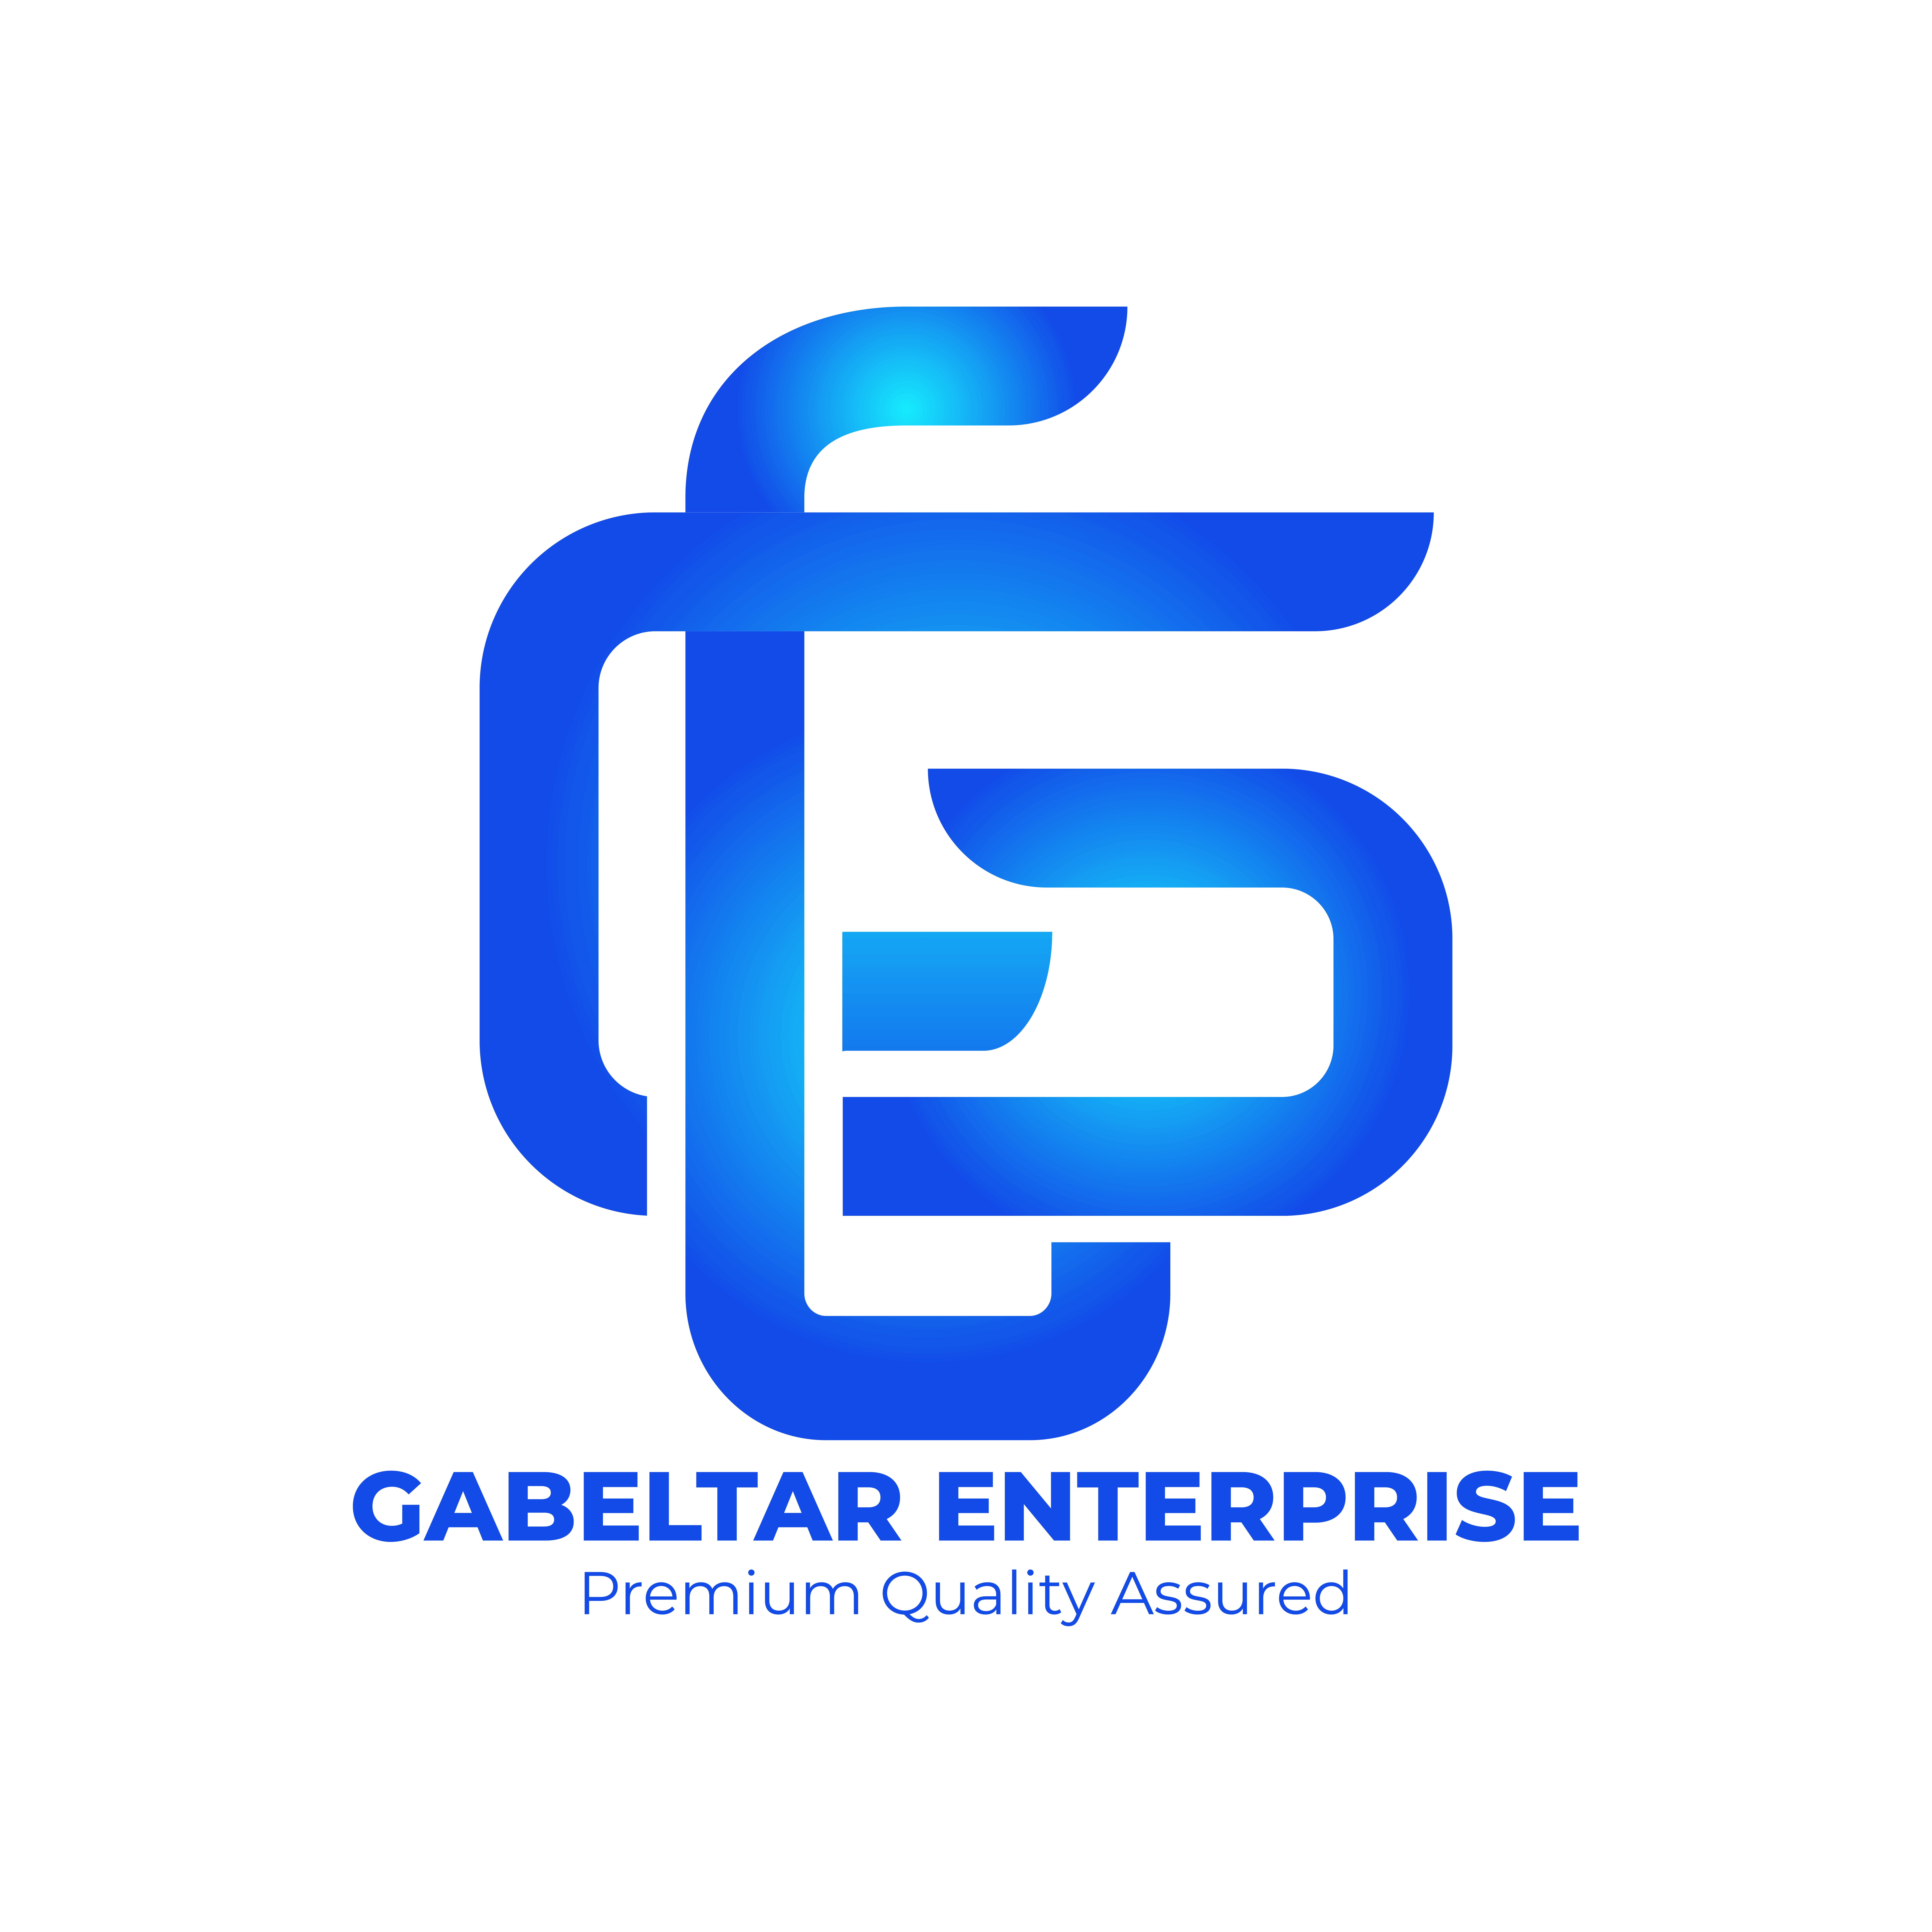 Gabeltar Enterprise-Premium Quality Assured